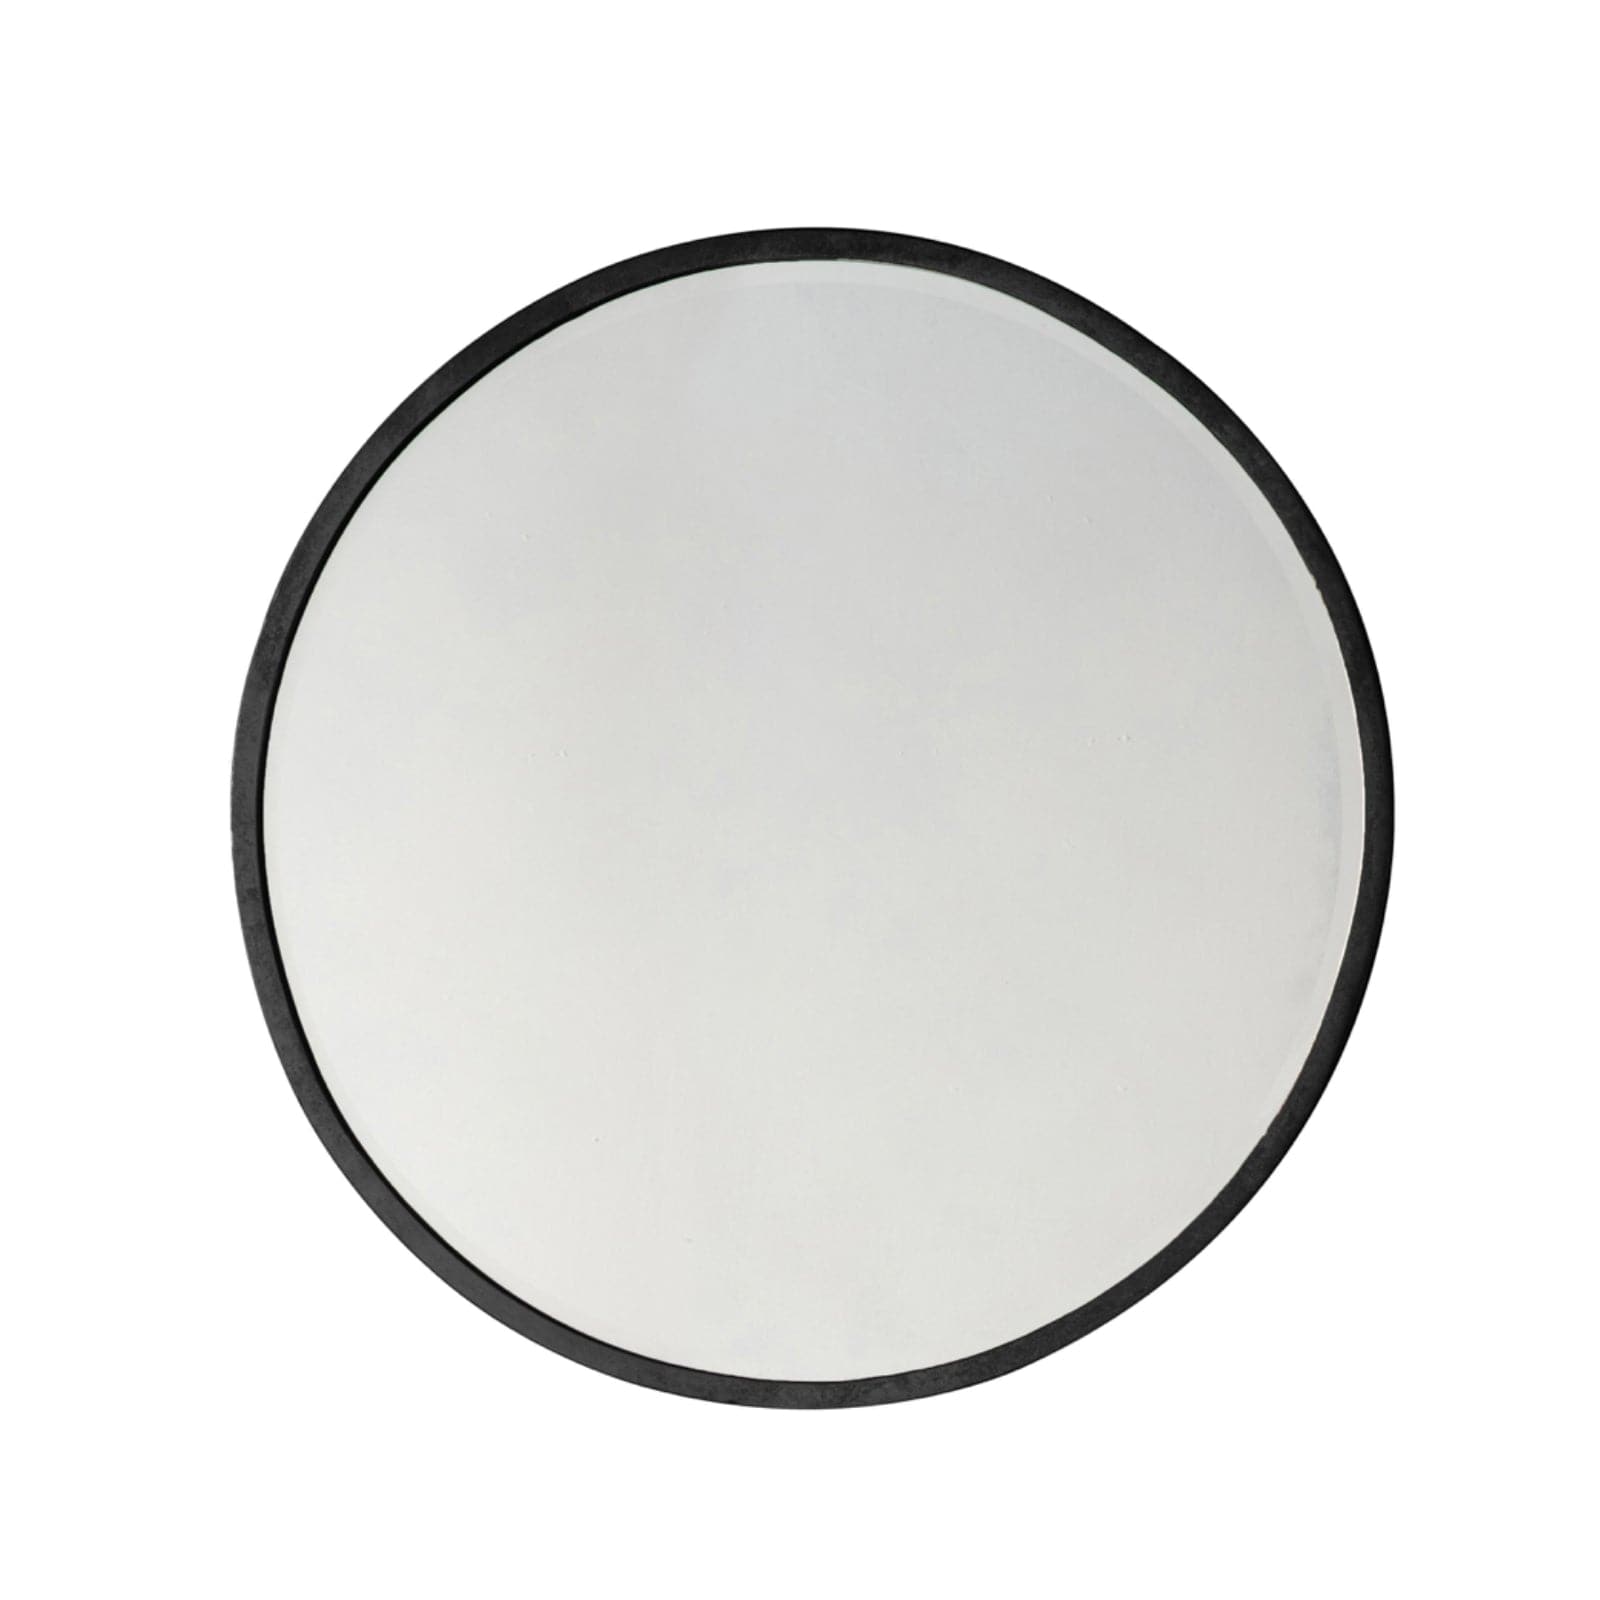 Large Round Black Frame Mirror - The Farthing